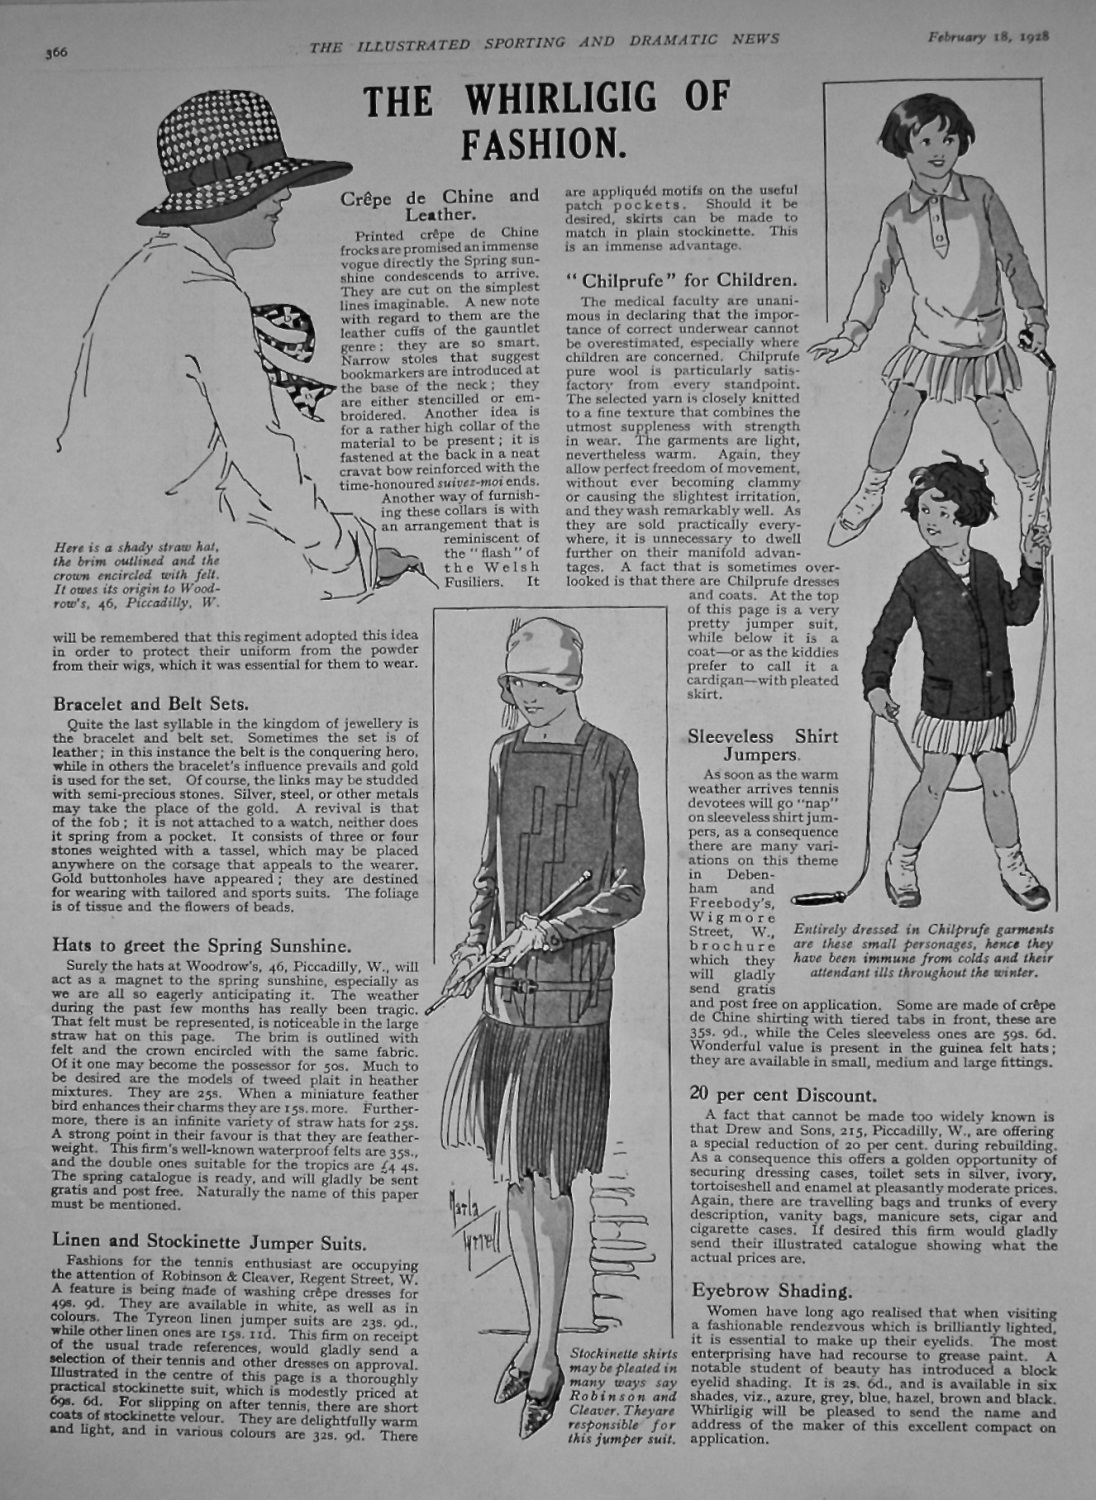 The Whirligig of Fashion. 1928.